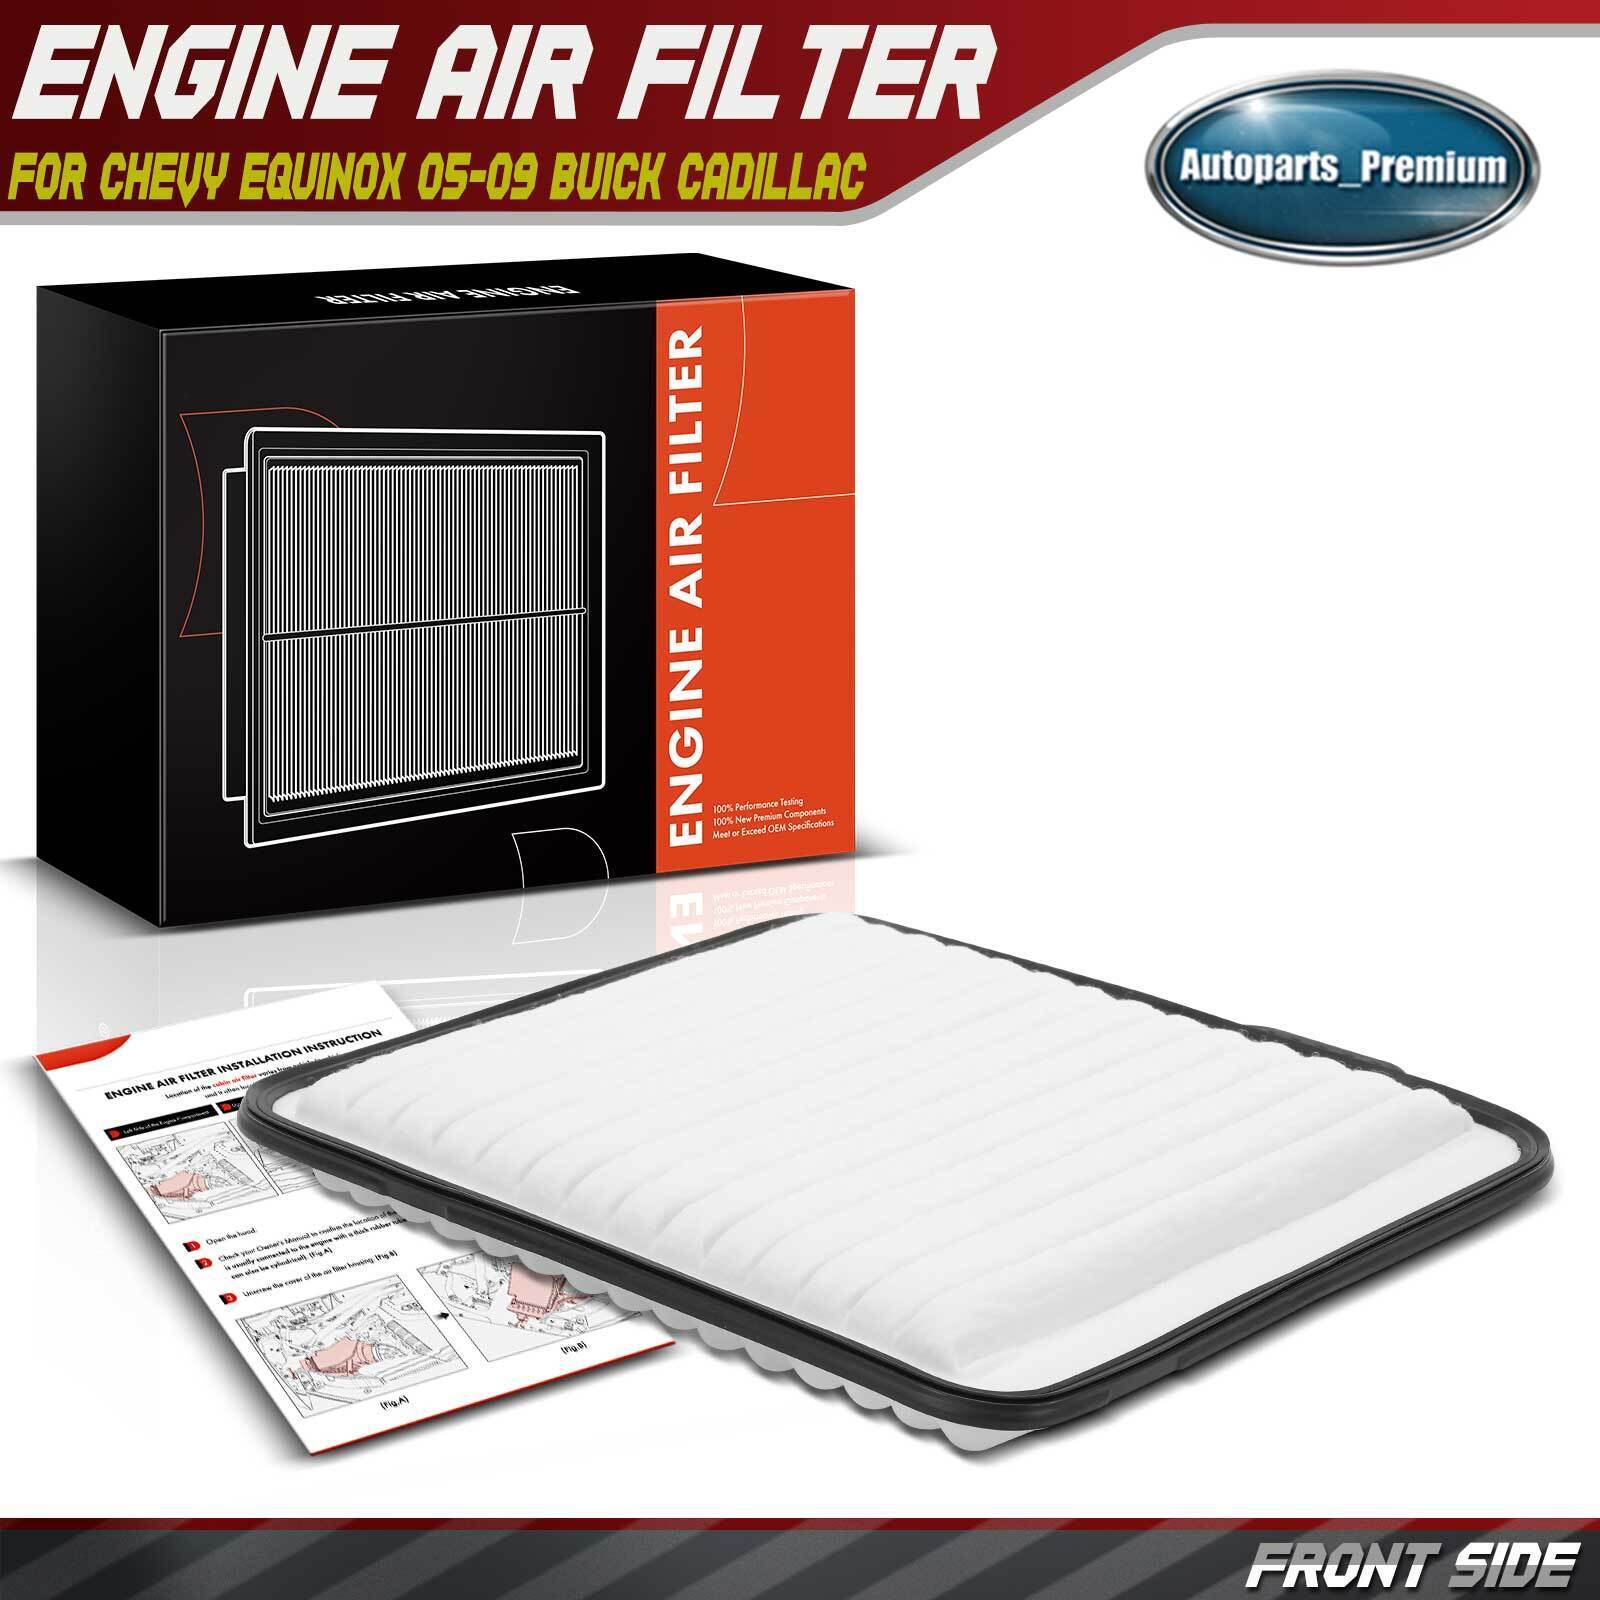 Engine Air Filter for Chevrolet Equinox 2005-2009 Pontiac Torrent Saturn Aura